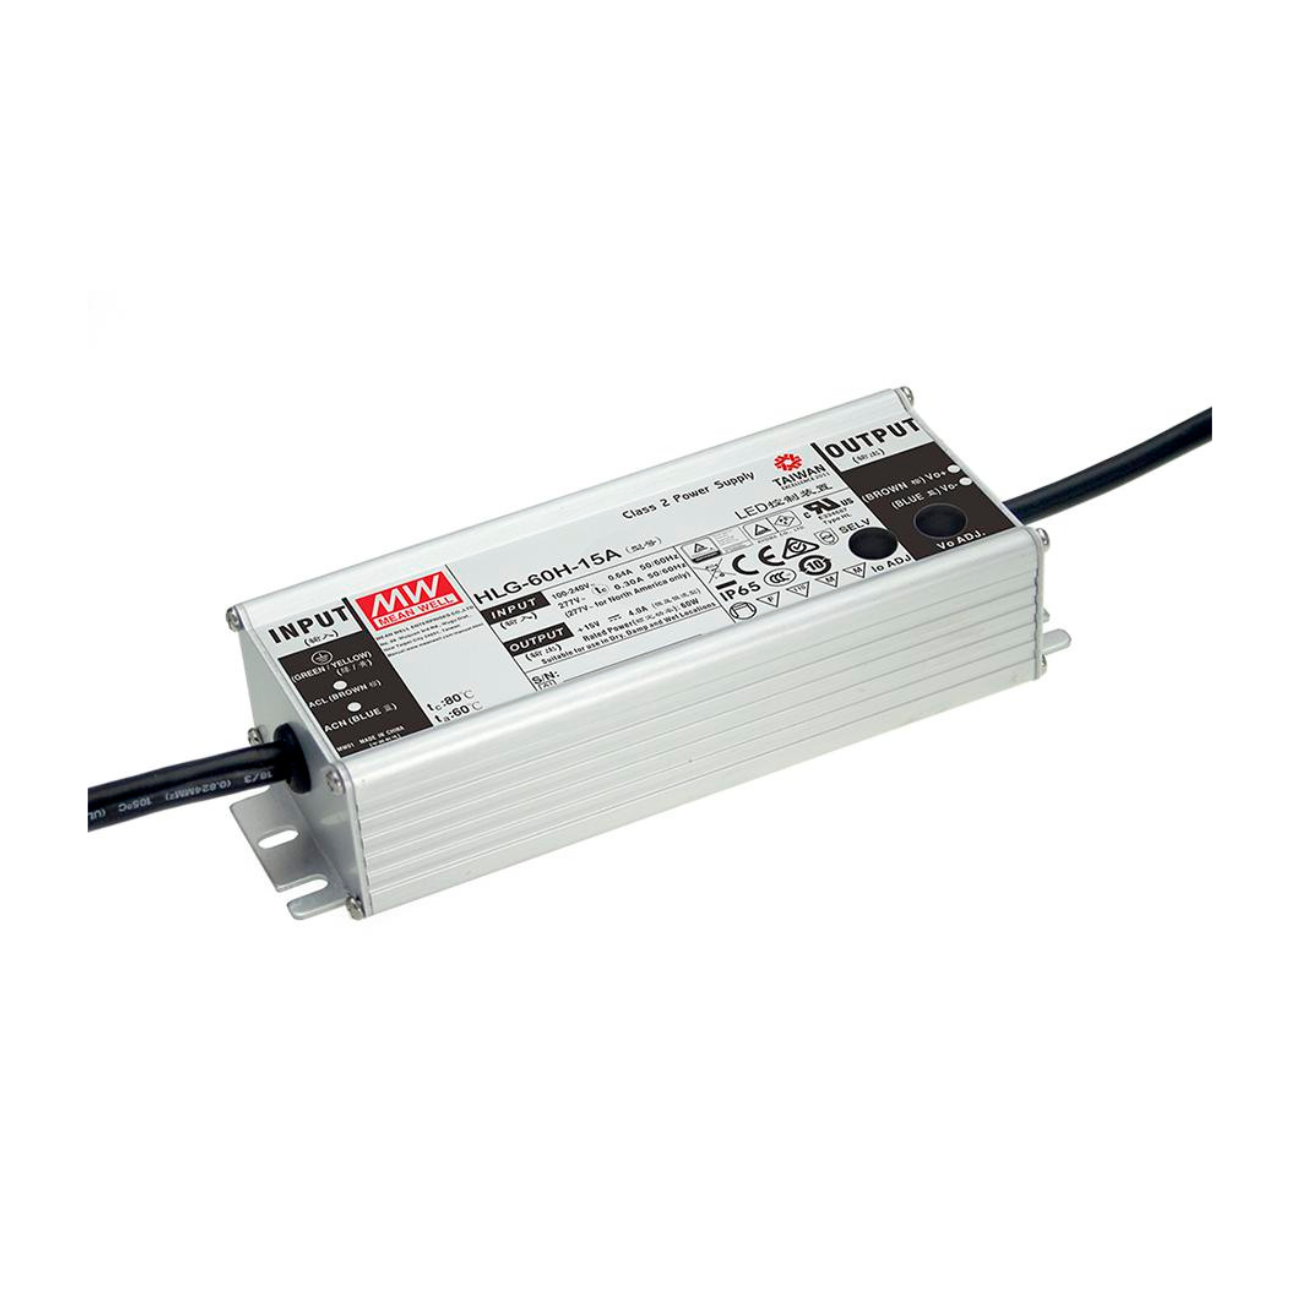 MeanWell HLG-60H-15AB (60W/15V) LED-Netzteil (dimmbar)